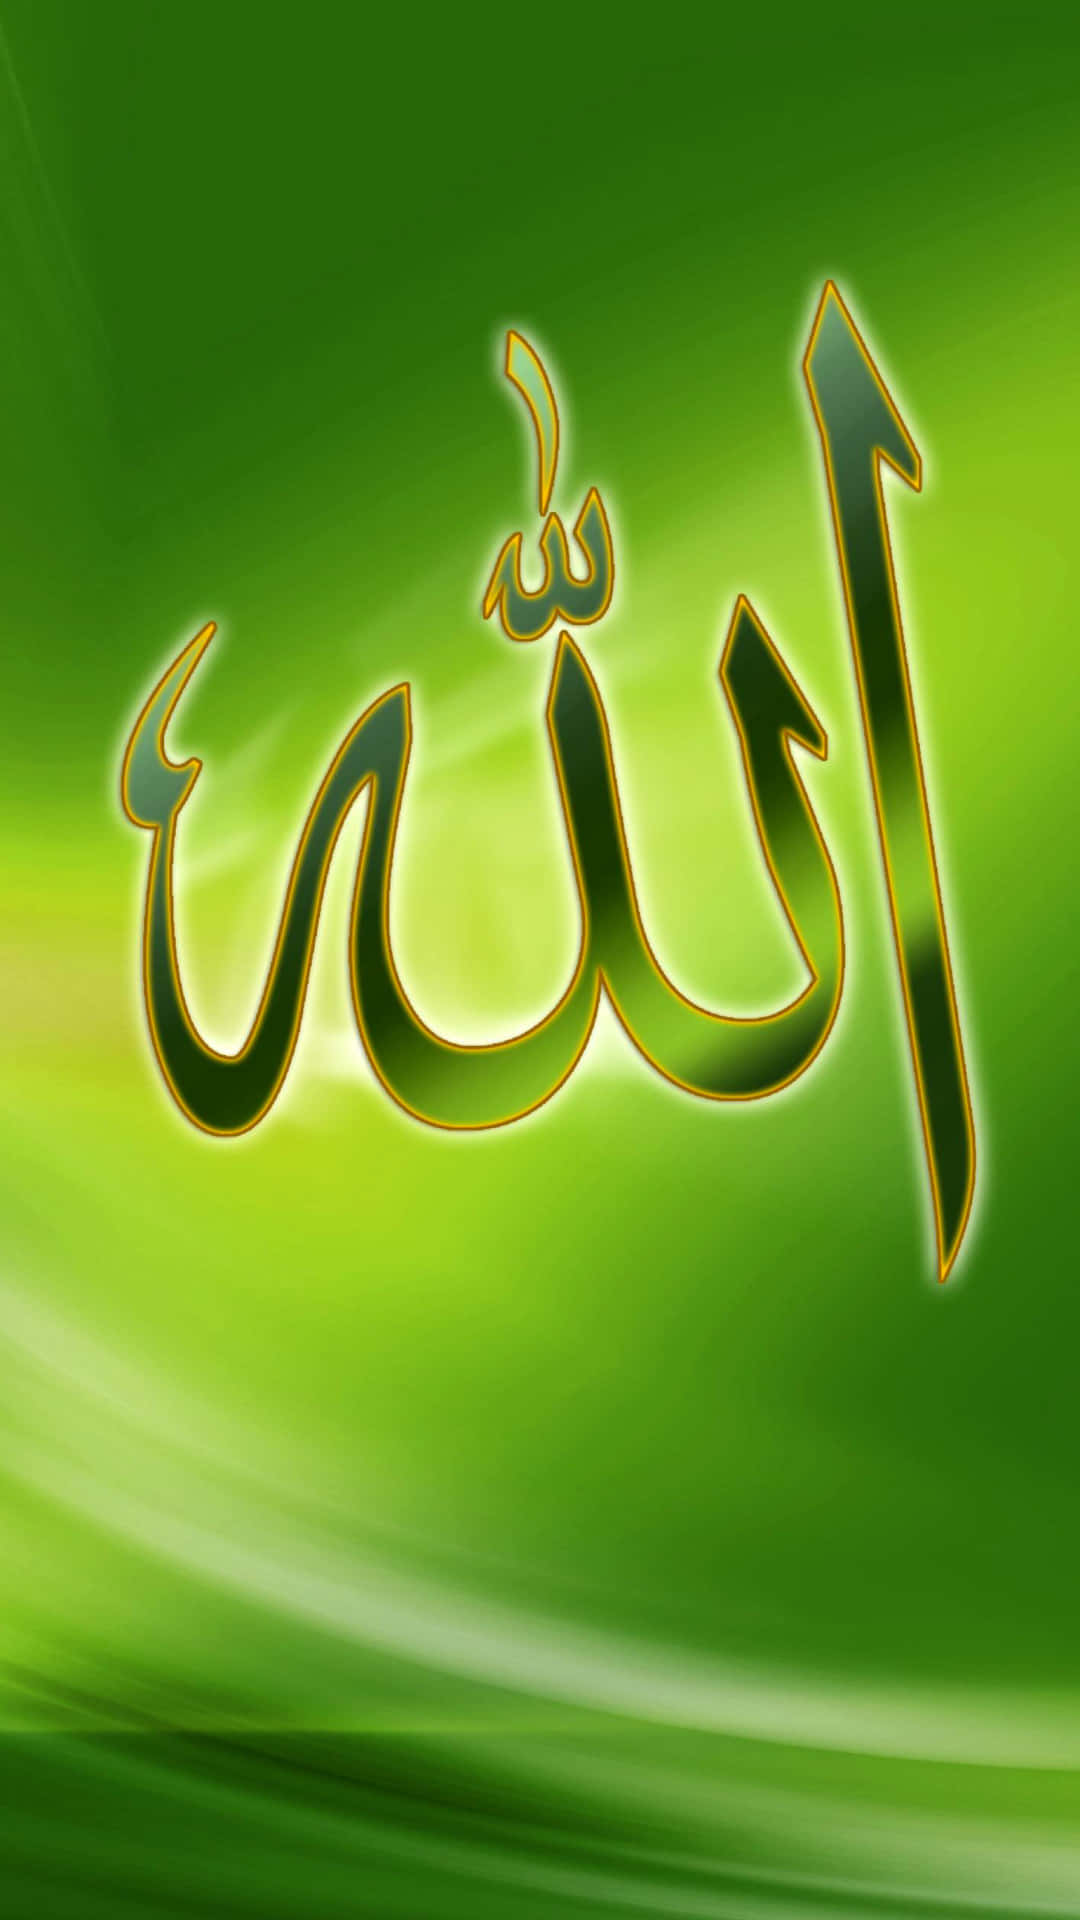 Allah,l'onnisciente E L'onnipresente